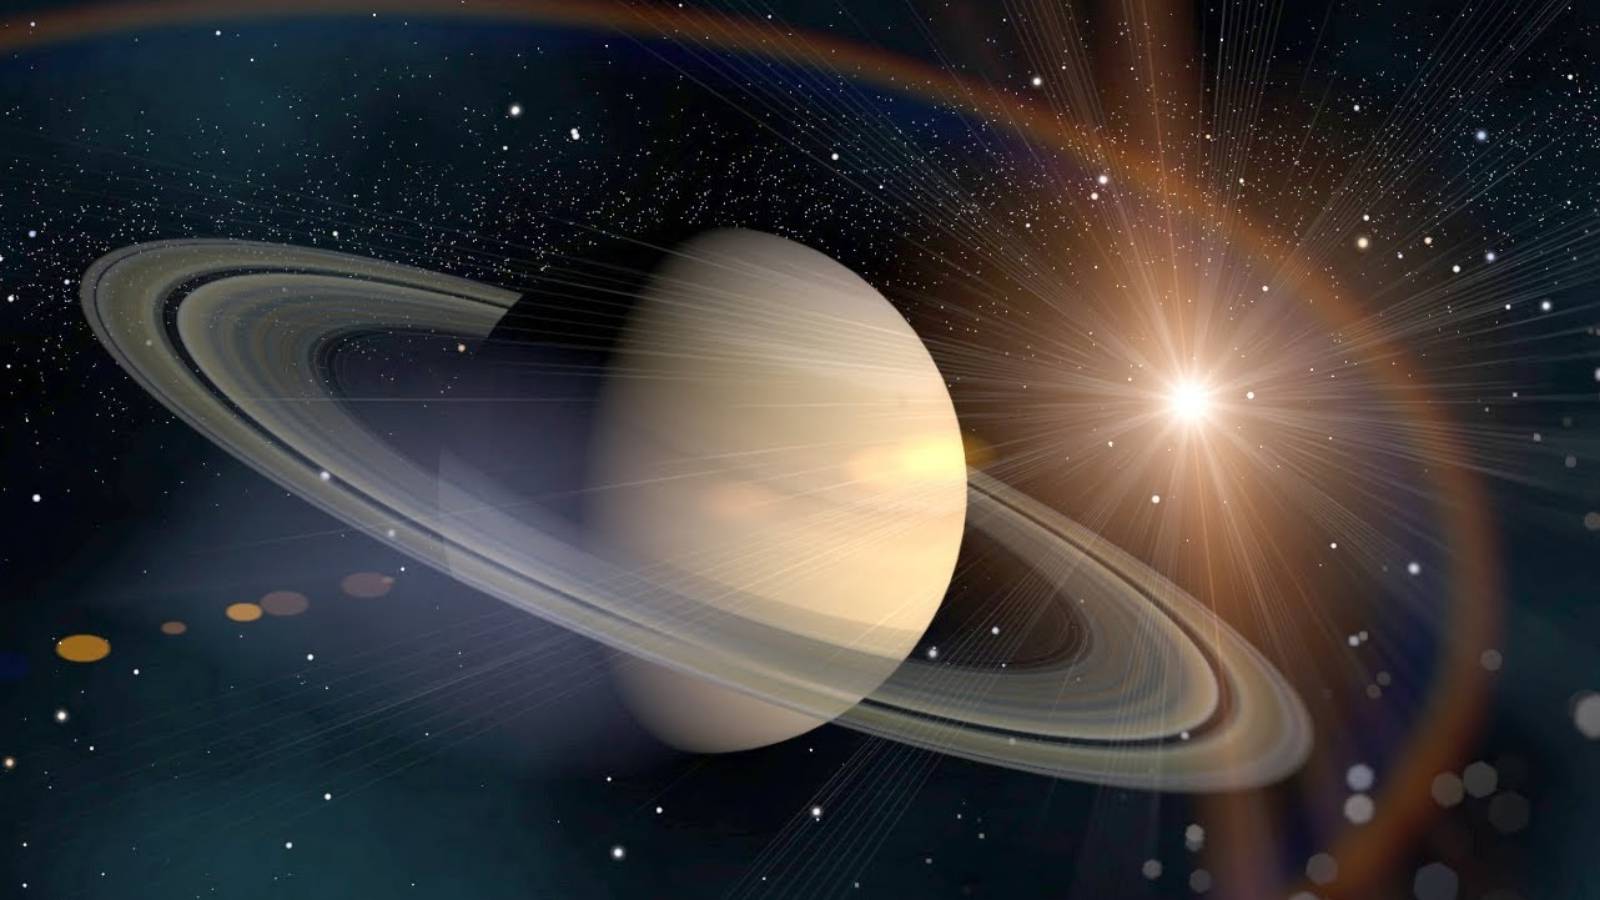 Planeta Saturn libelula